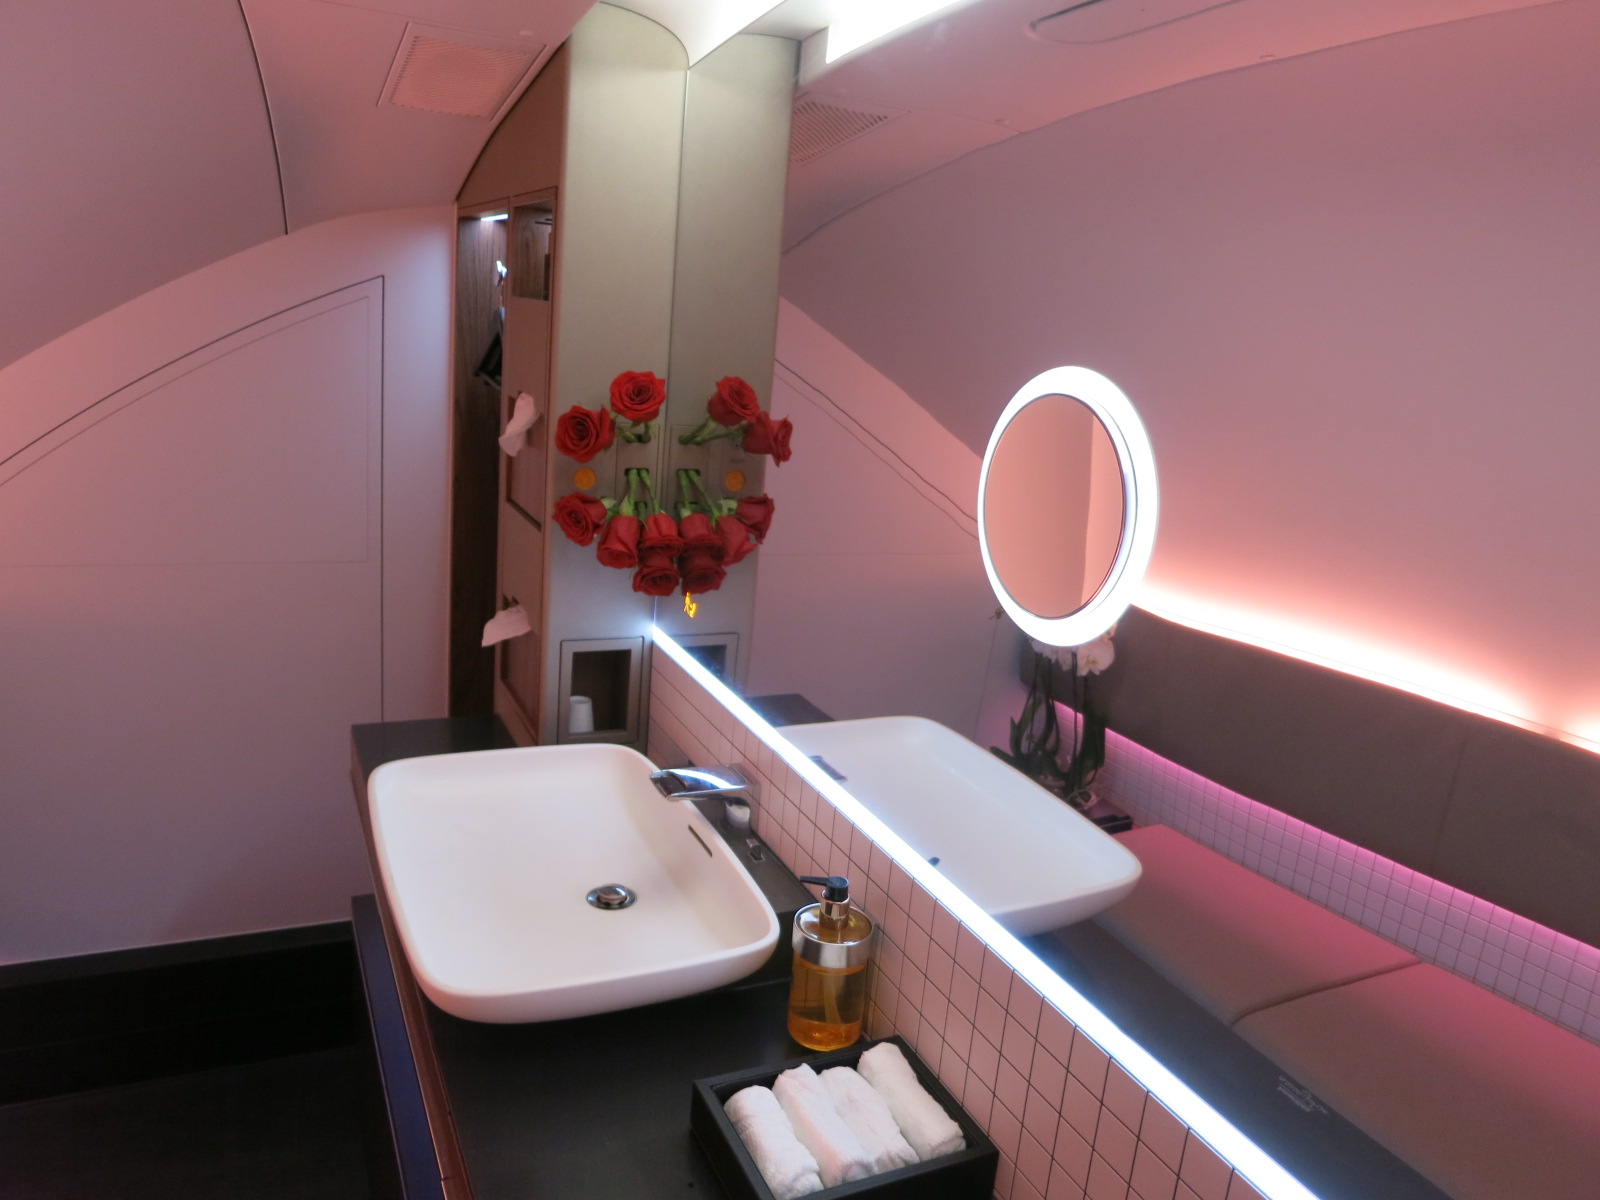 Qatar Airways A380 first class bathroom Bangkok-Doha 